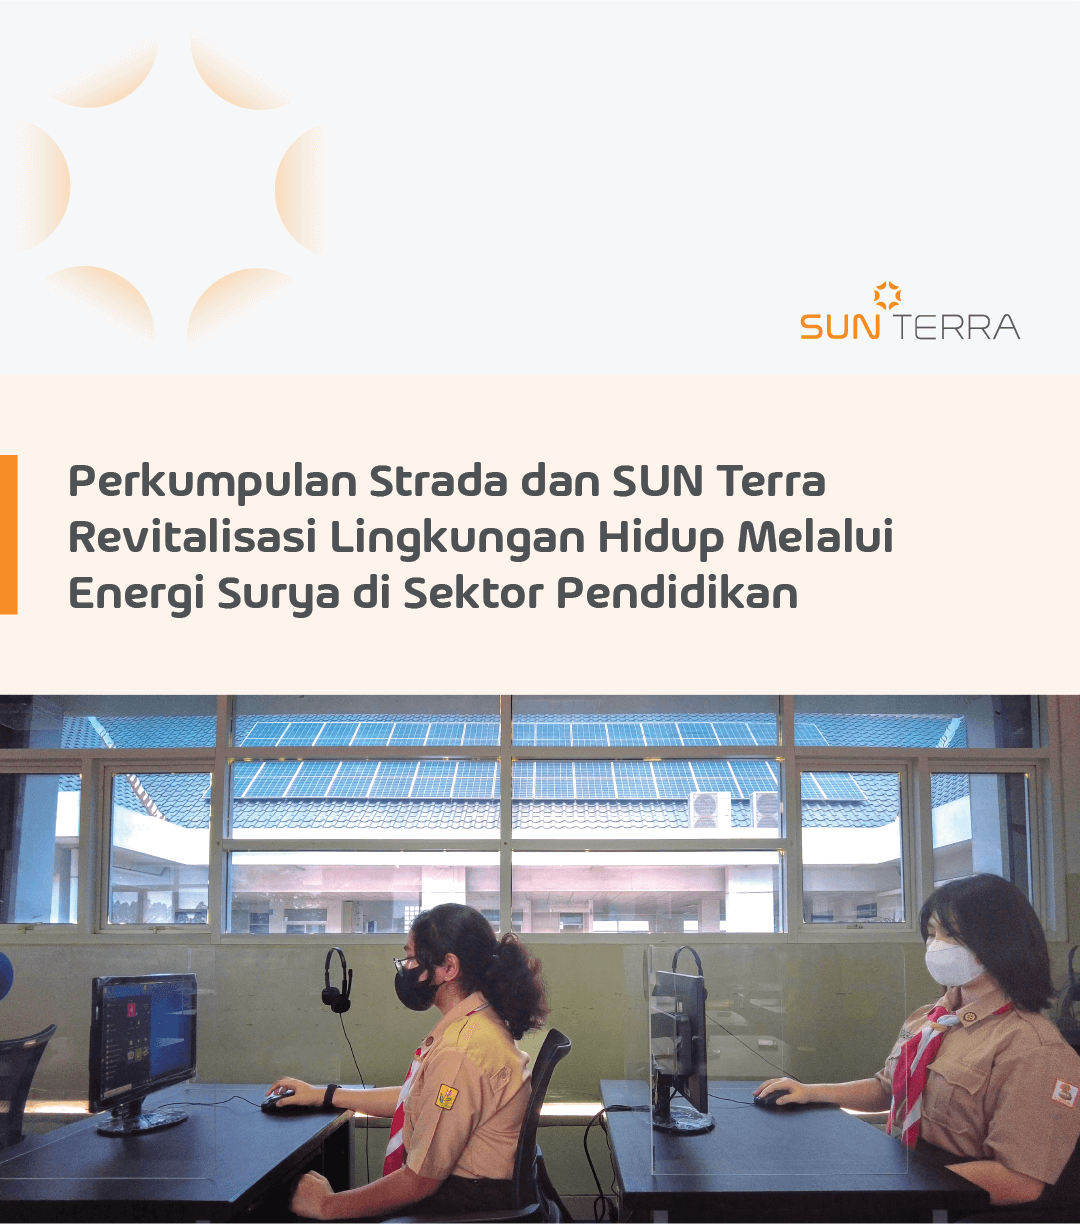 Perkumpulan Strada dan SUN Terra Revitalisasi Lingkungan Hidup Melalui Energi Surya di Sektor Pendidikan